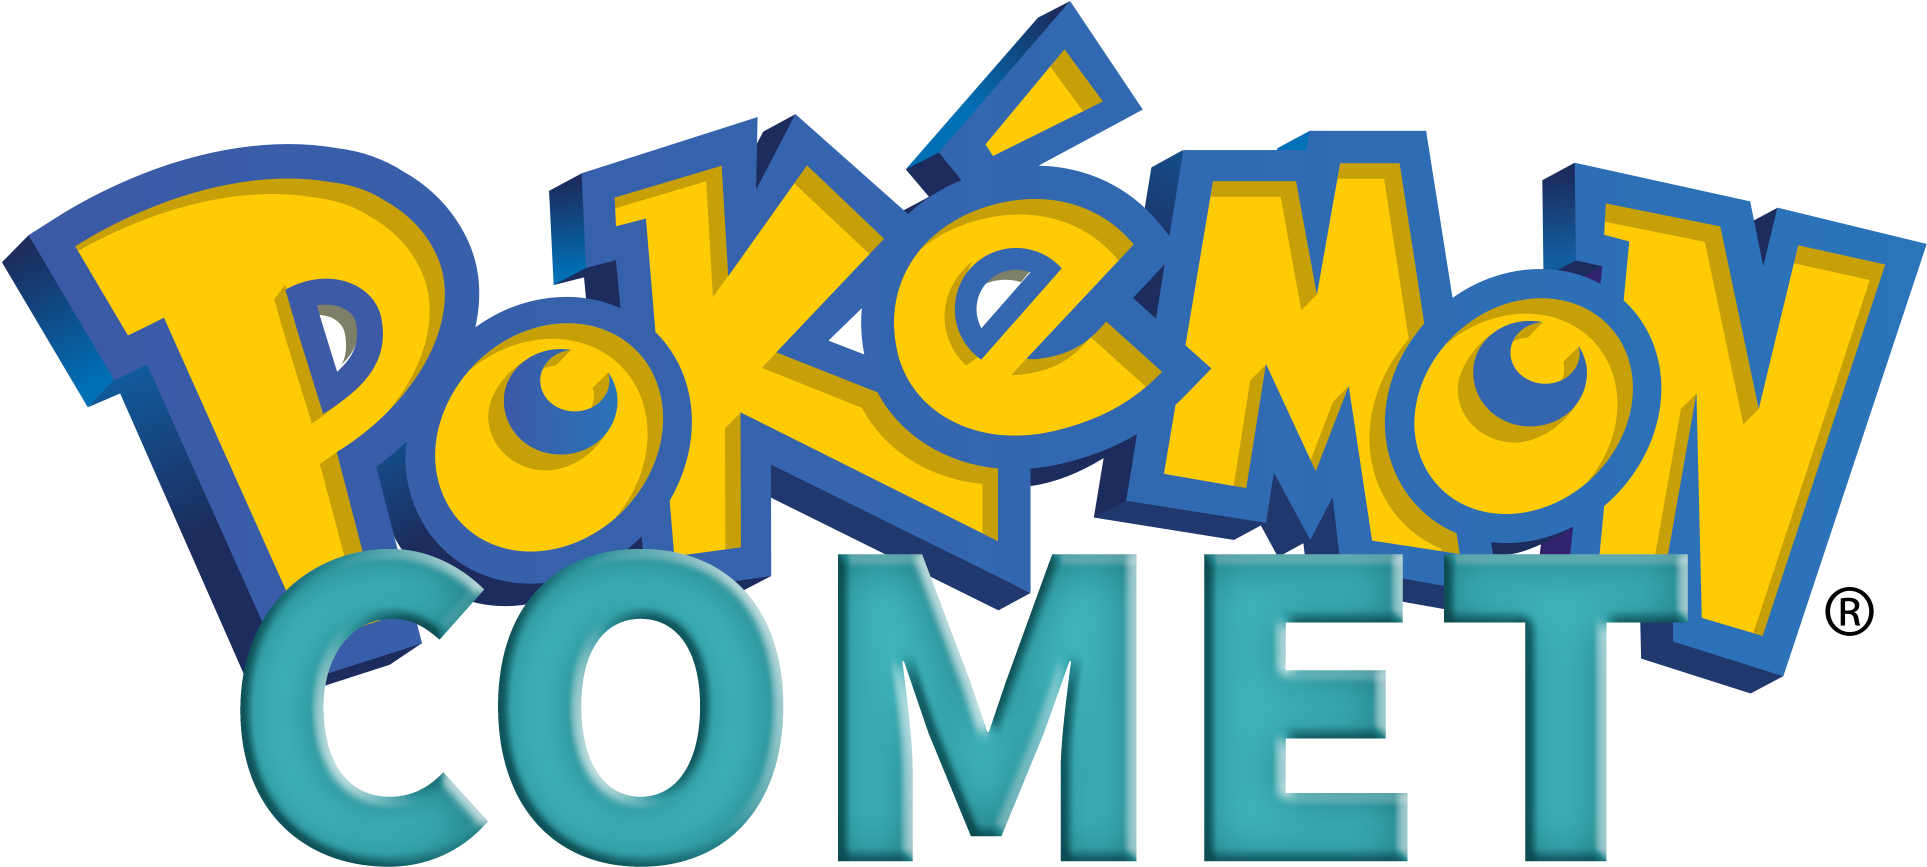 Pokémon Comet And Asteroid Versions - Pokemon 9-pocket Portfolio: Pikachu (2457x957)